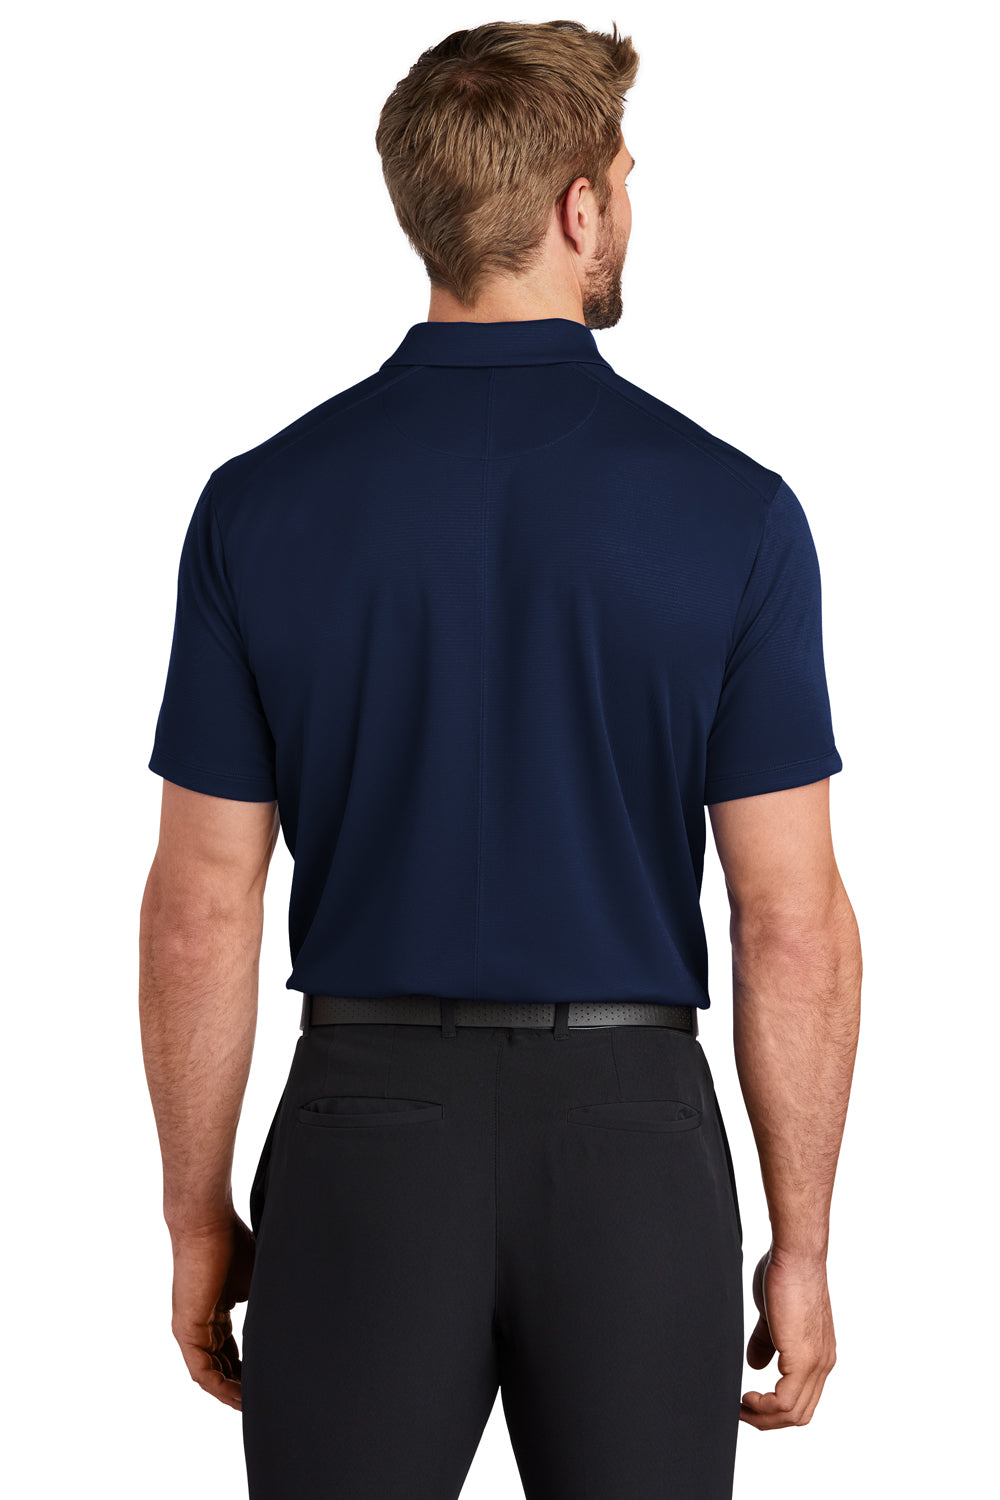 Nike NKBV6042 Mens Essential Dri-Fit Moisture Wicking Short Sleeve Polo Shirt Midnight Navy Blue Model Back